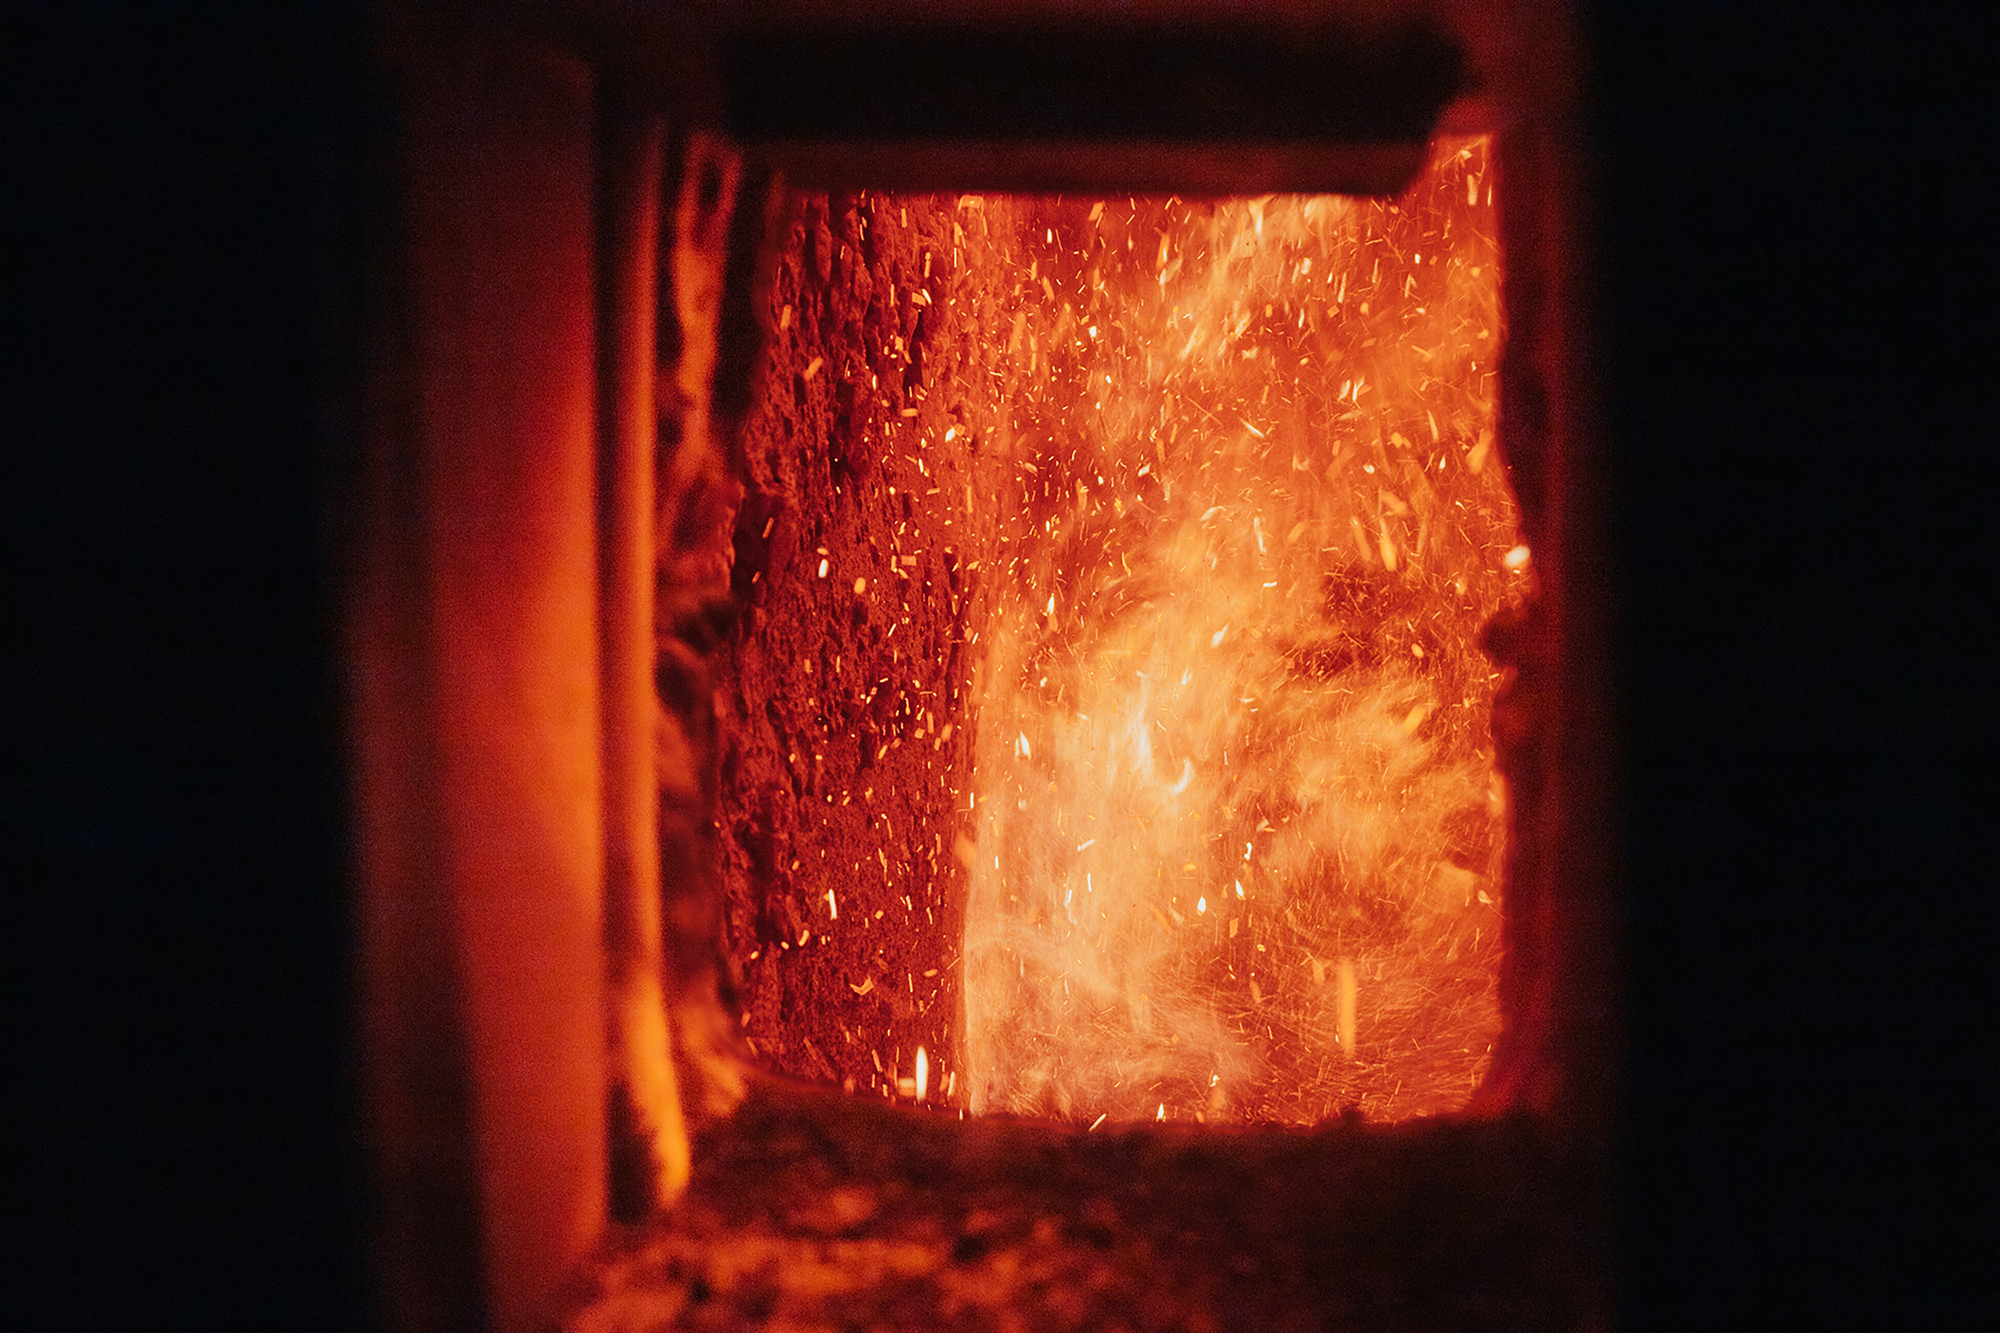 Inside the biomass furnace.